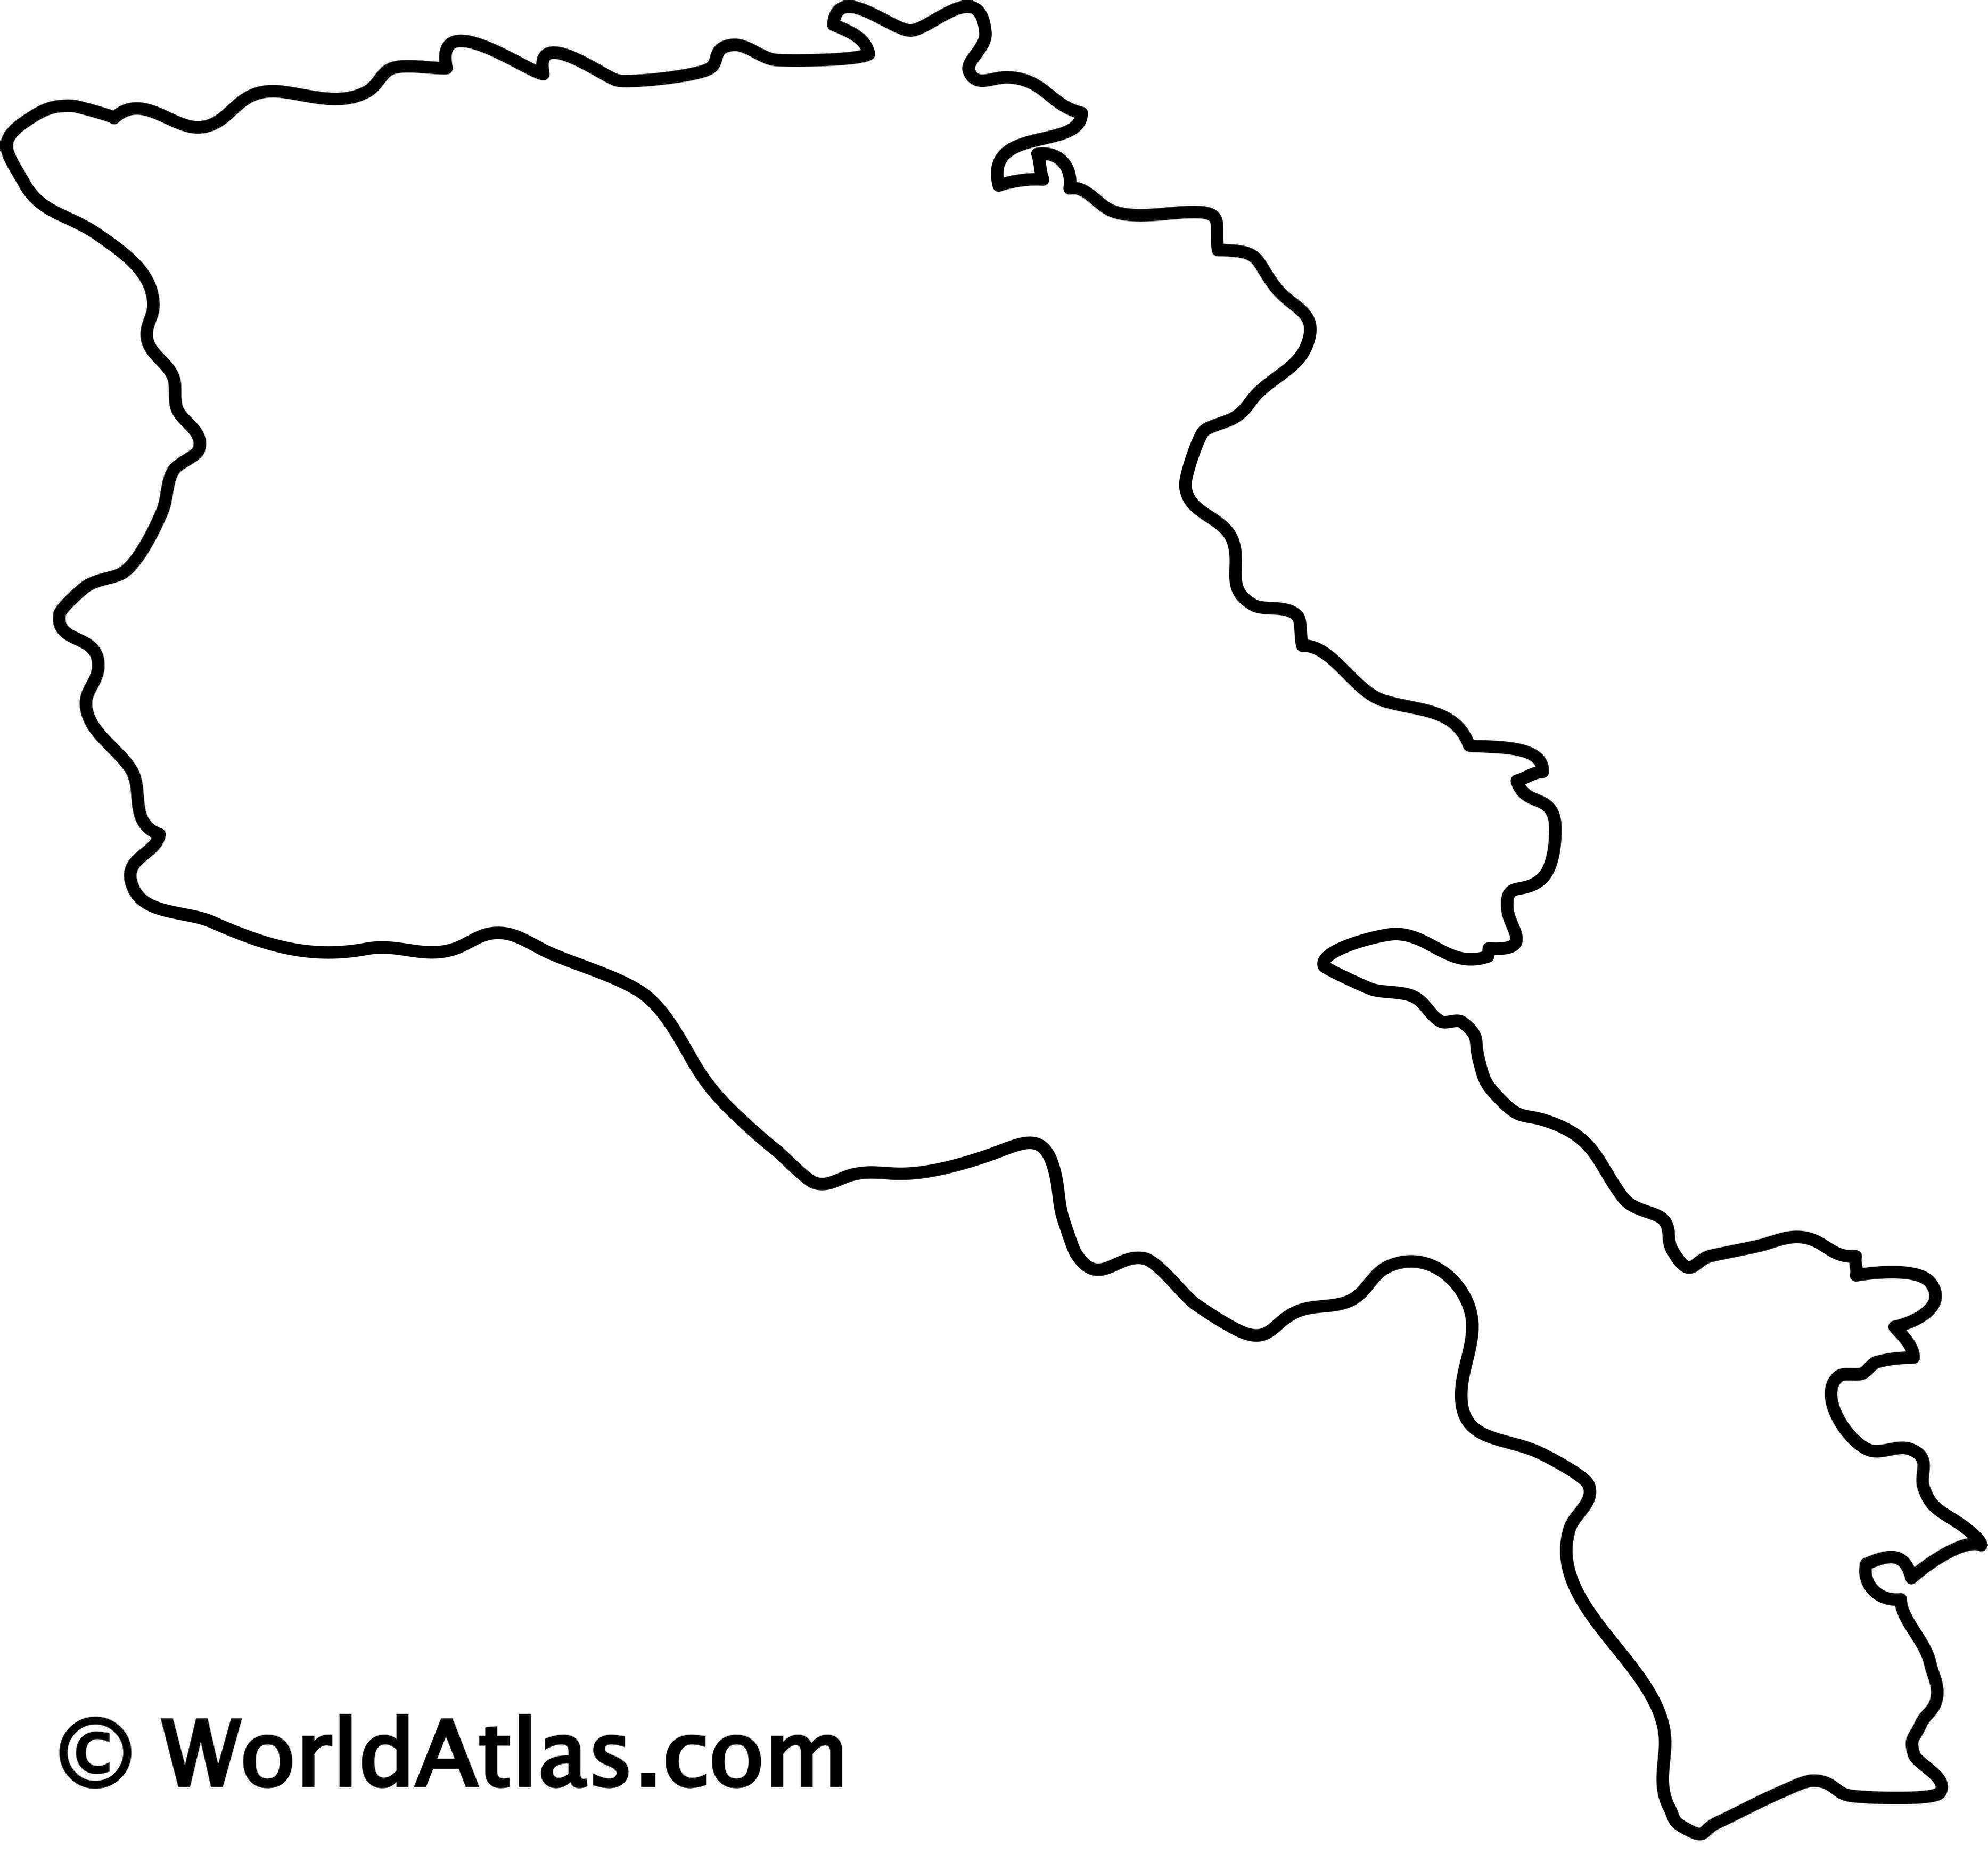 Map of Armenia (today)  Armenia, Armenia travel, Armenian culture